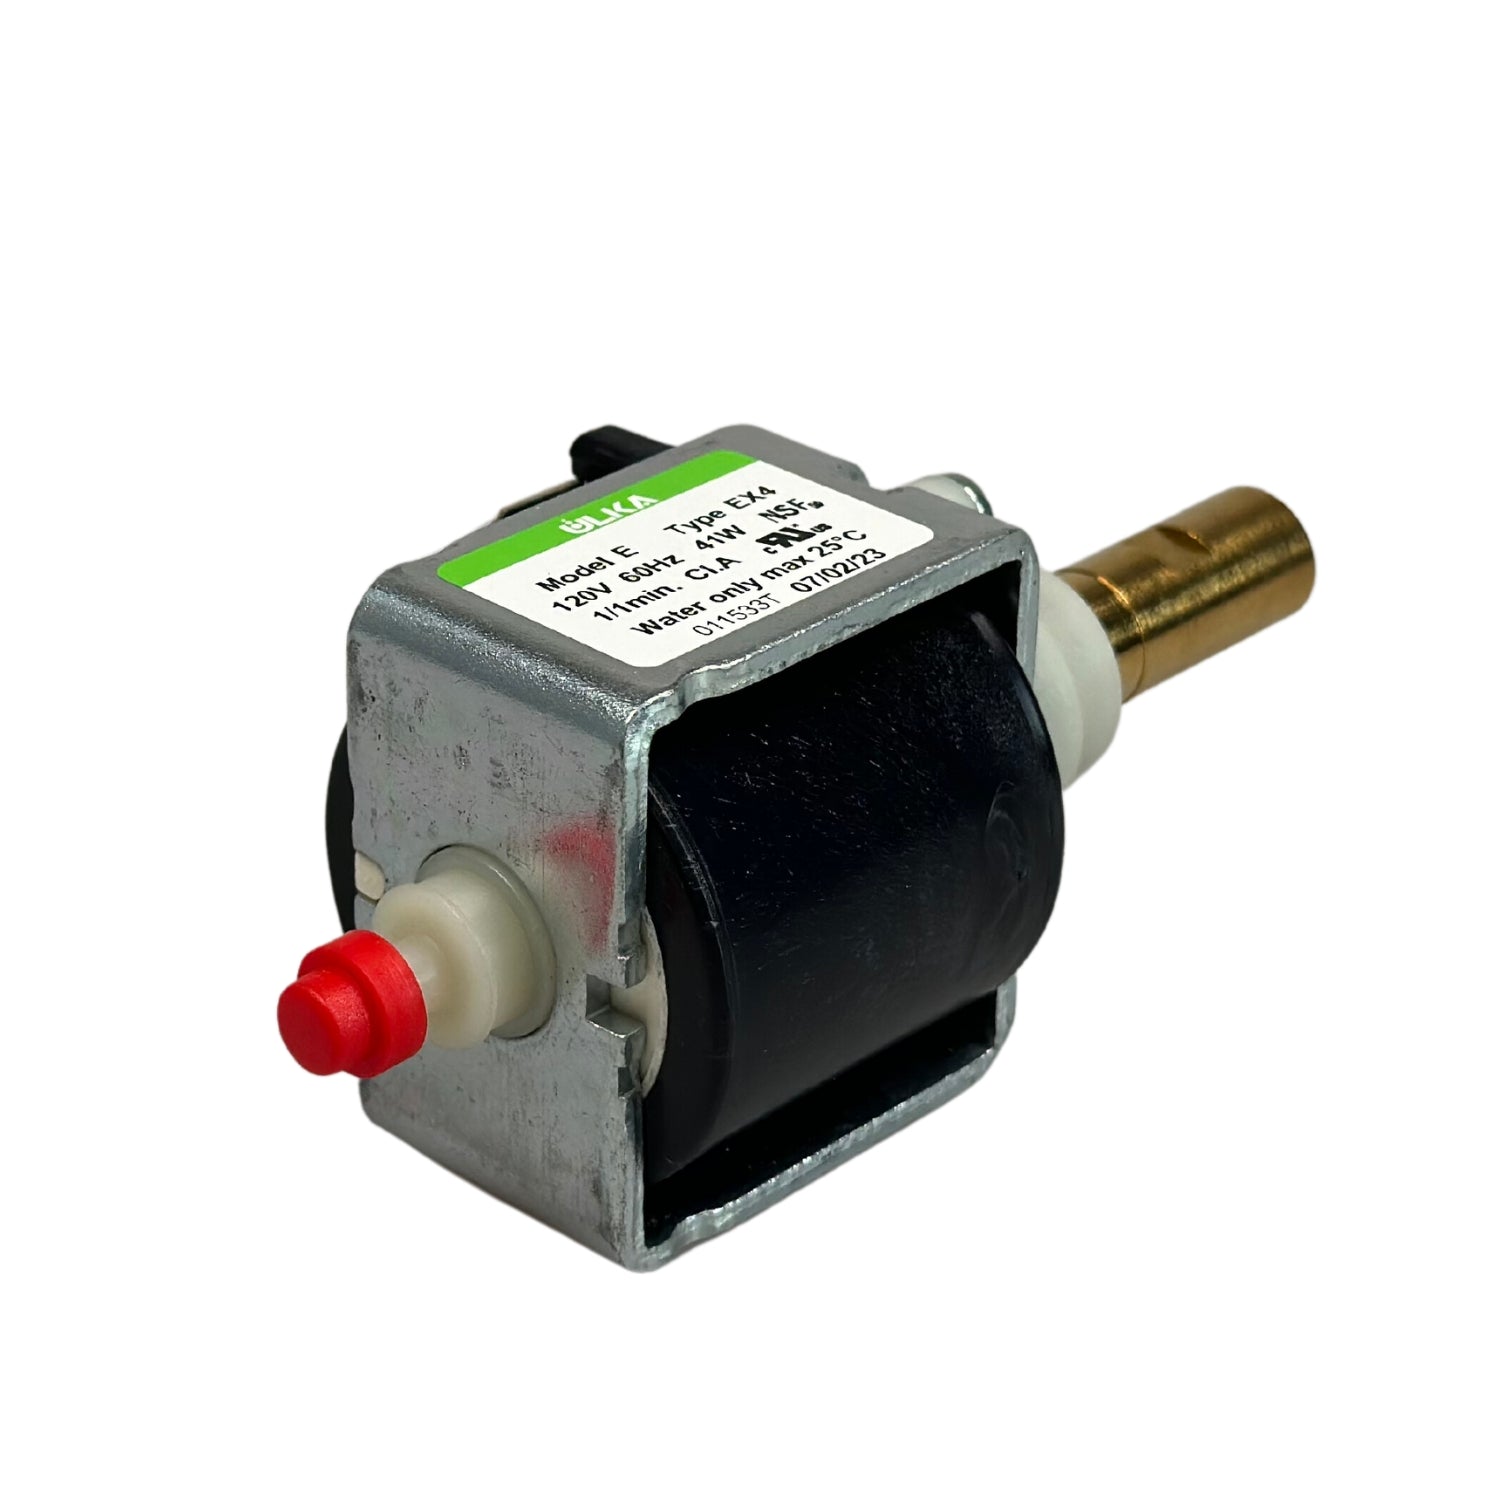 Ulka Vibration Pump EX4 - 120V, 60Hz, 41W, NSF